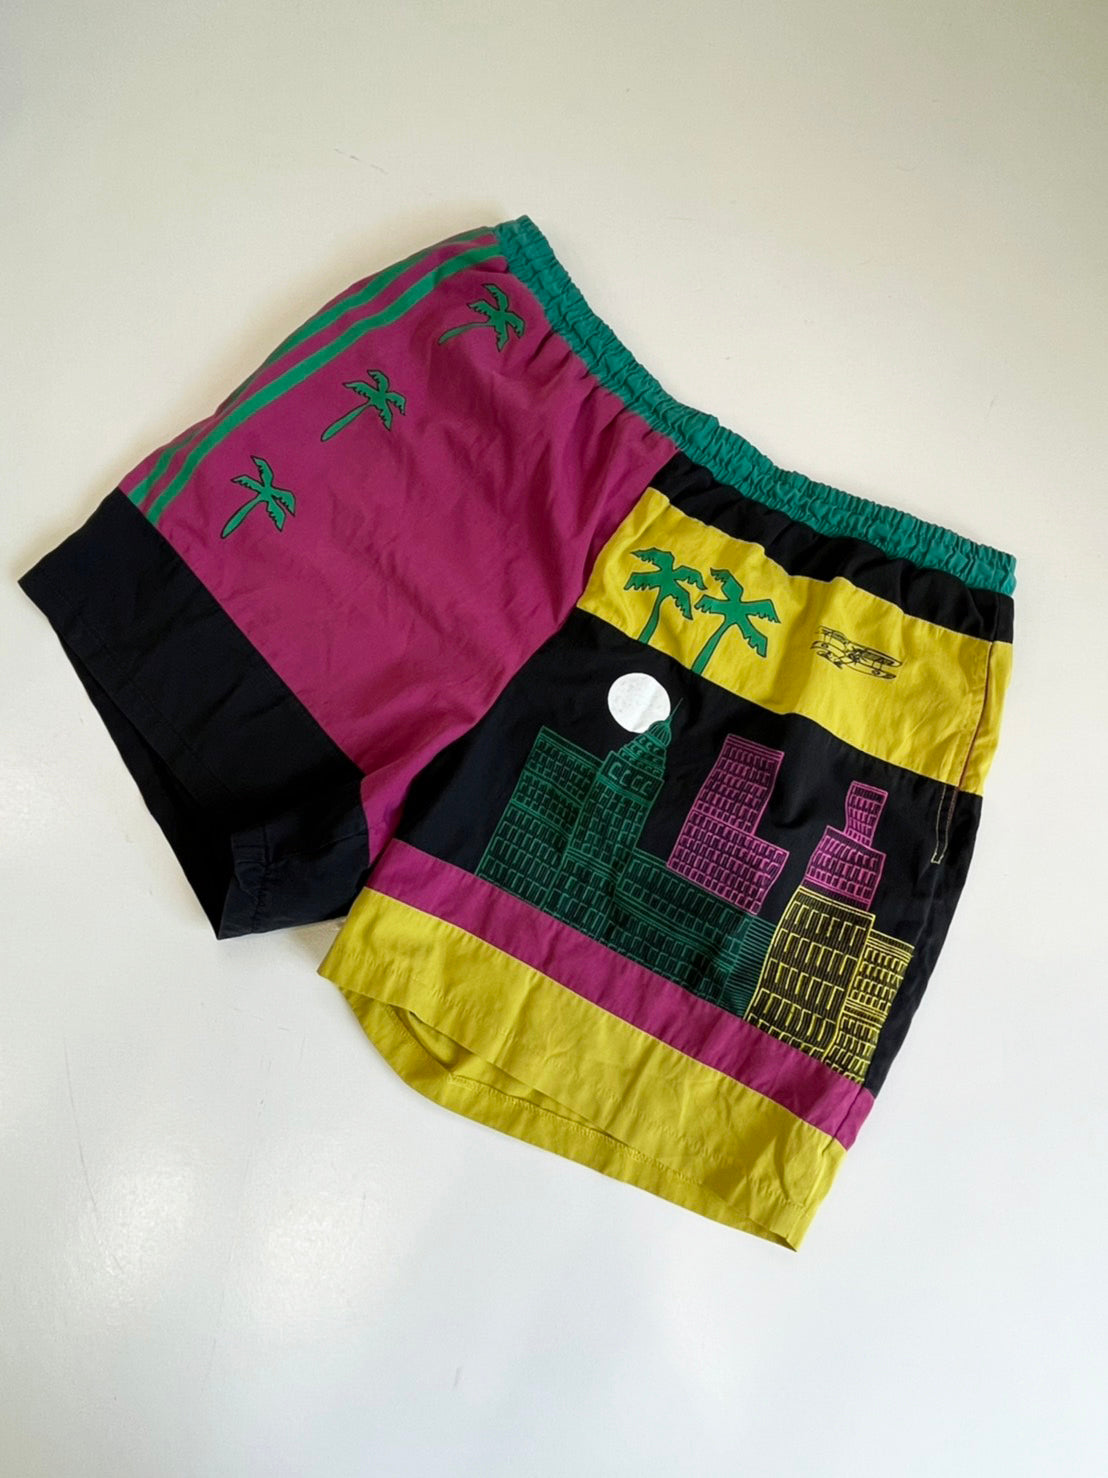 【EURO vintage 】BEACH TOWN vintage beach shorts  メンズ 水着 サーフパンツ ボードショーツ (men's Lサイズ）